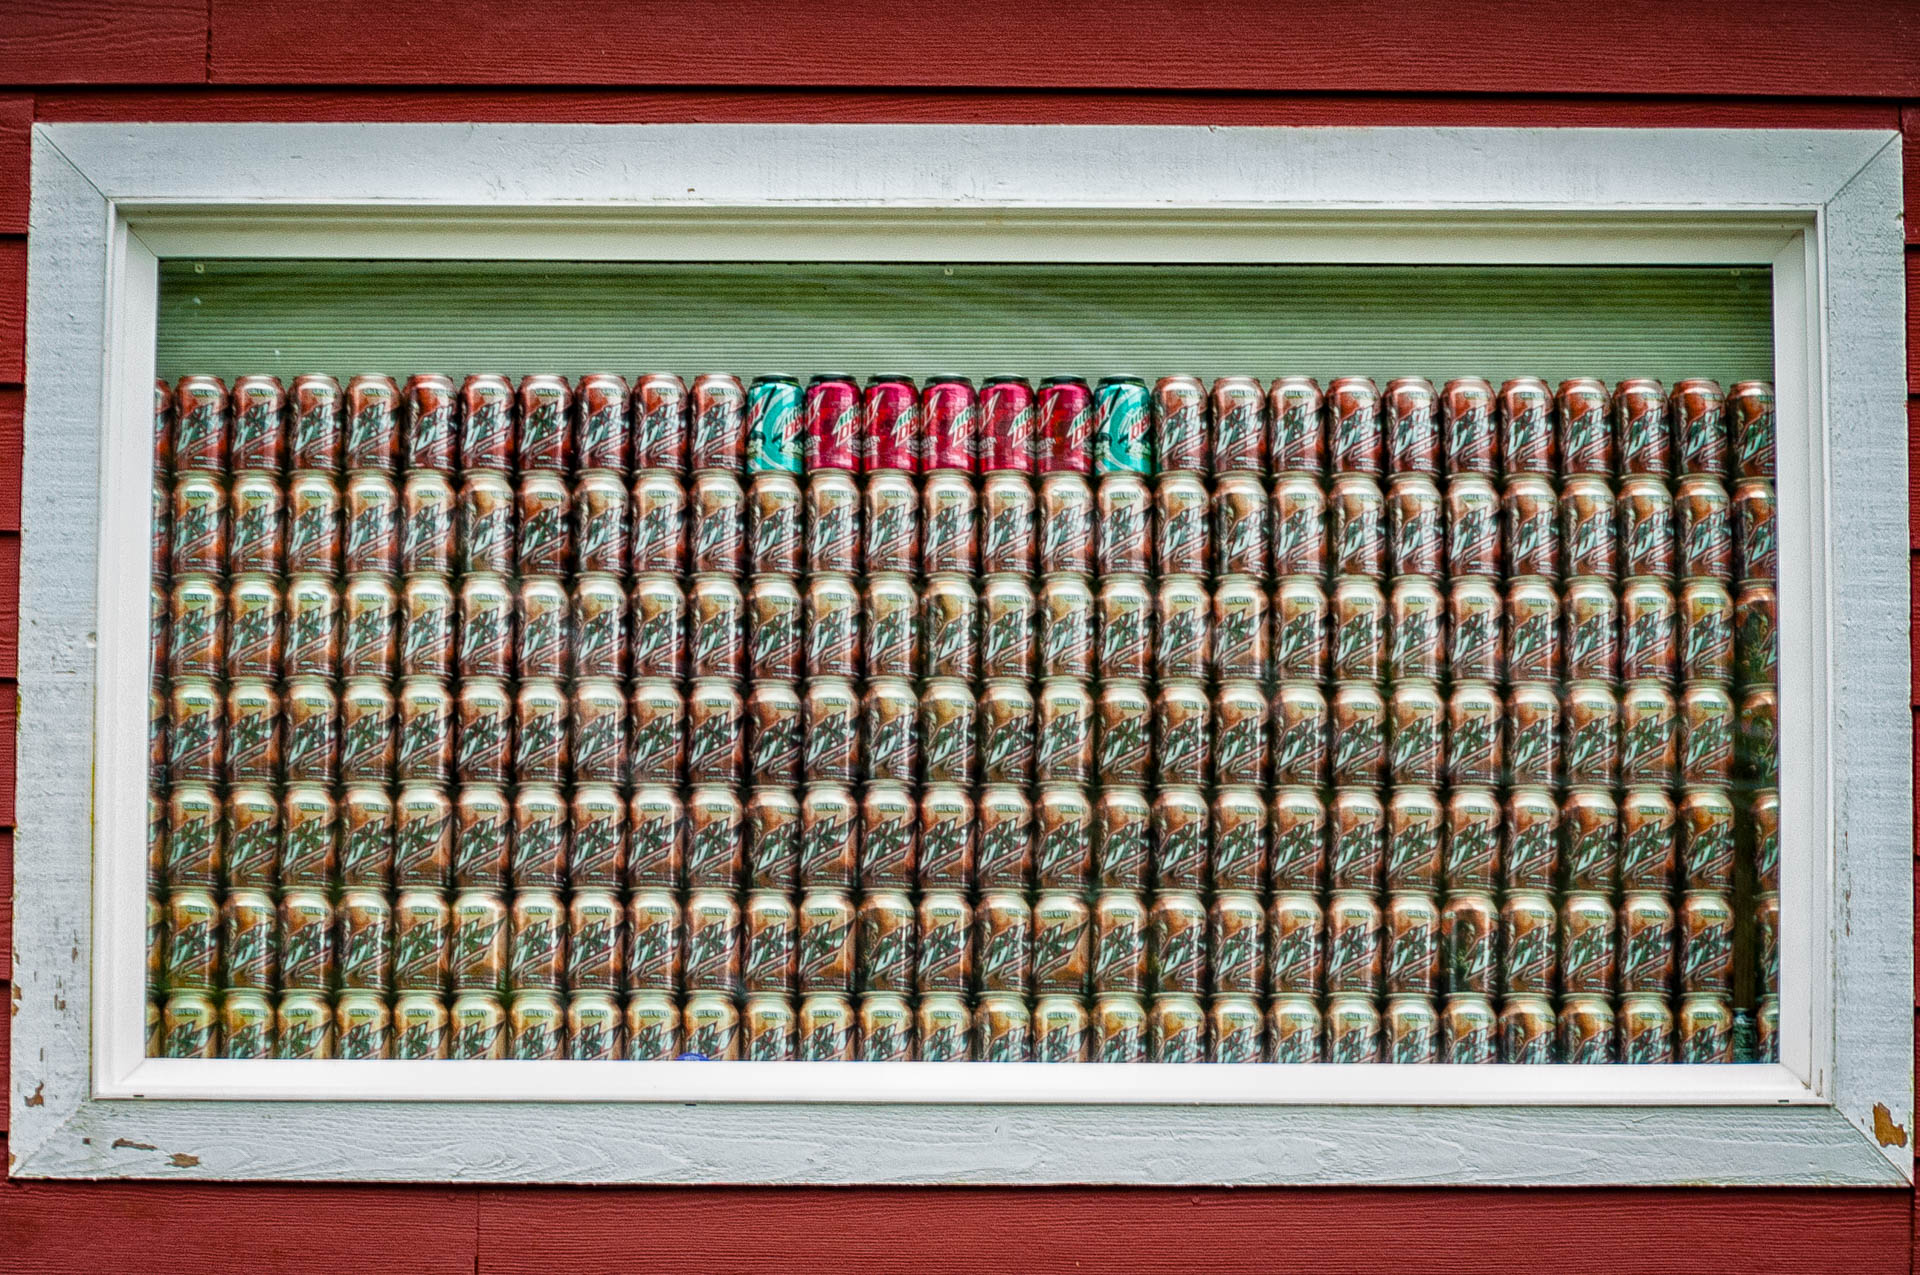 Beer can window covering in Ketchikan